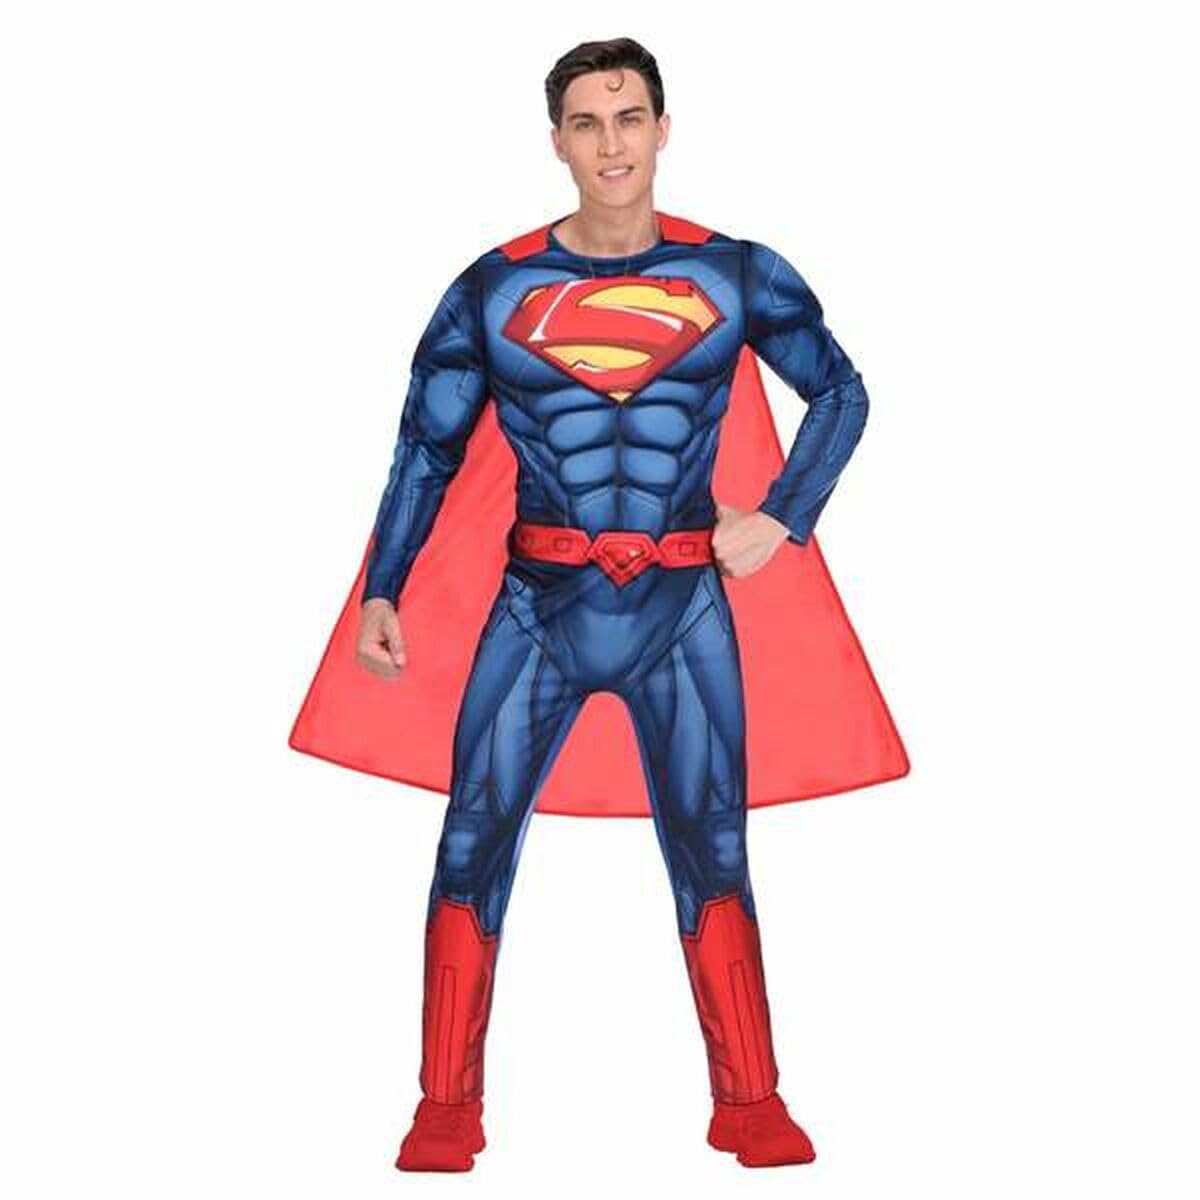 Amscan - Erwachsenenkostüm Superman, Overall mit gepolsterter Brust, Umhang, Super Heroes, Comic, Motto-Party, Karneval